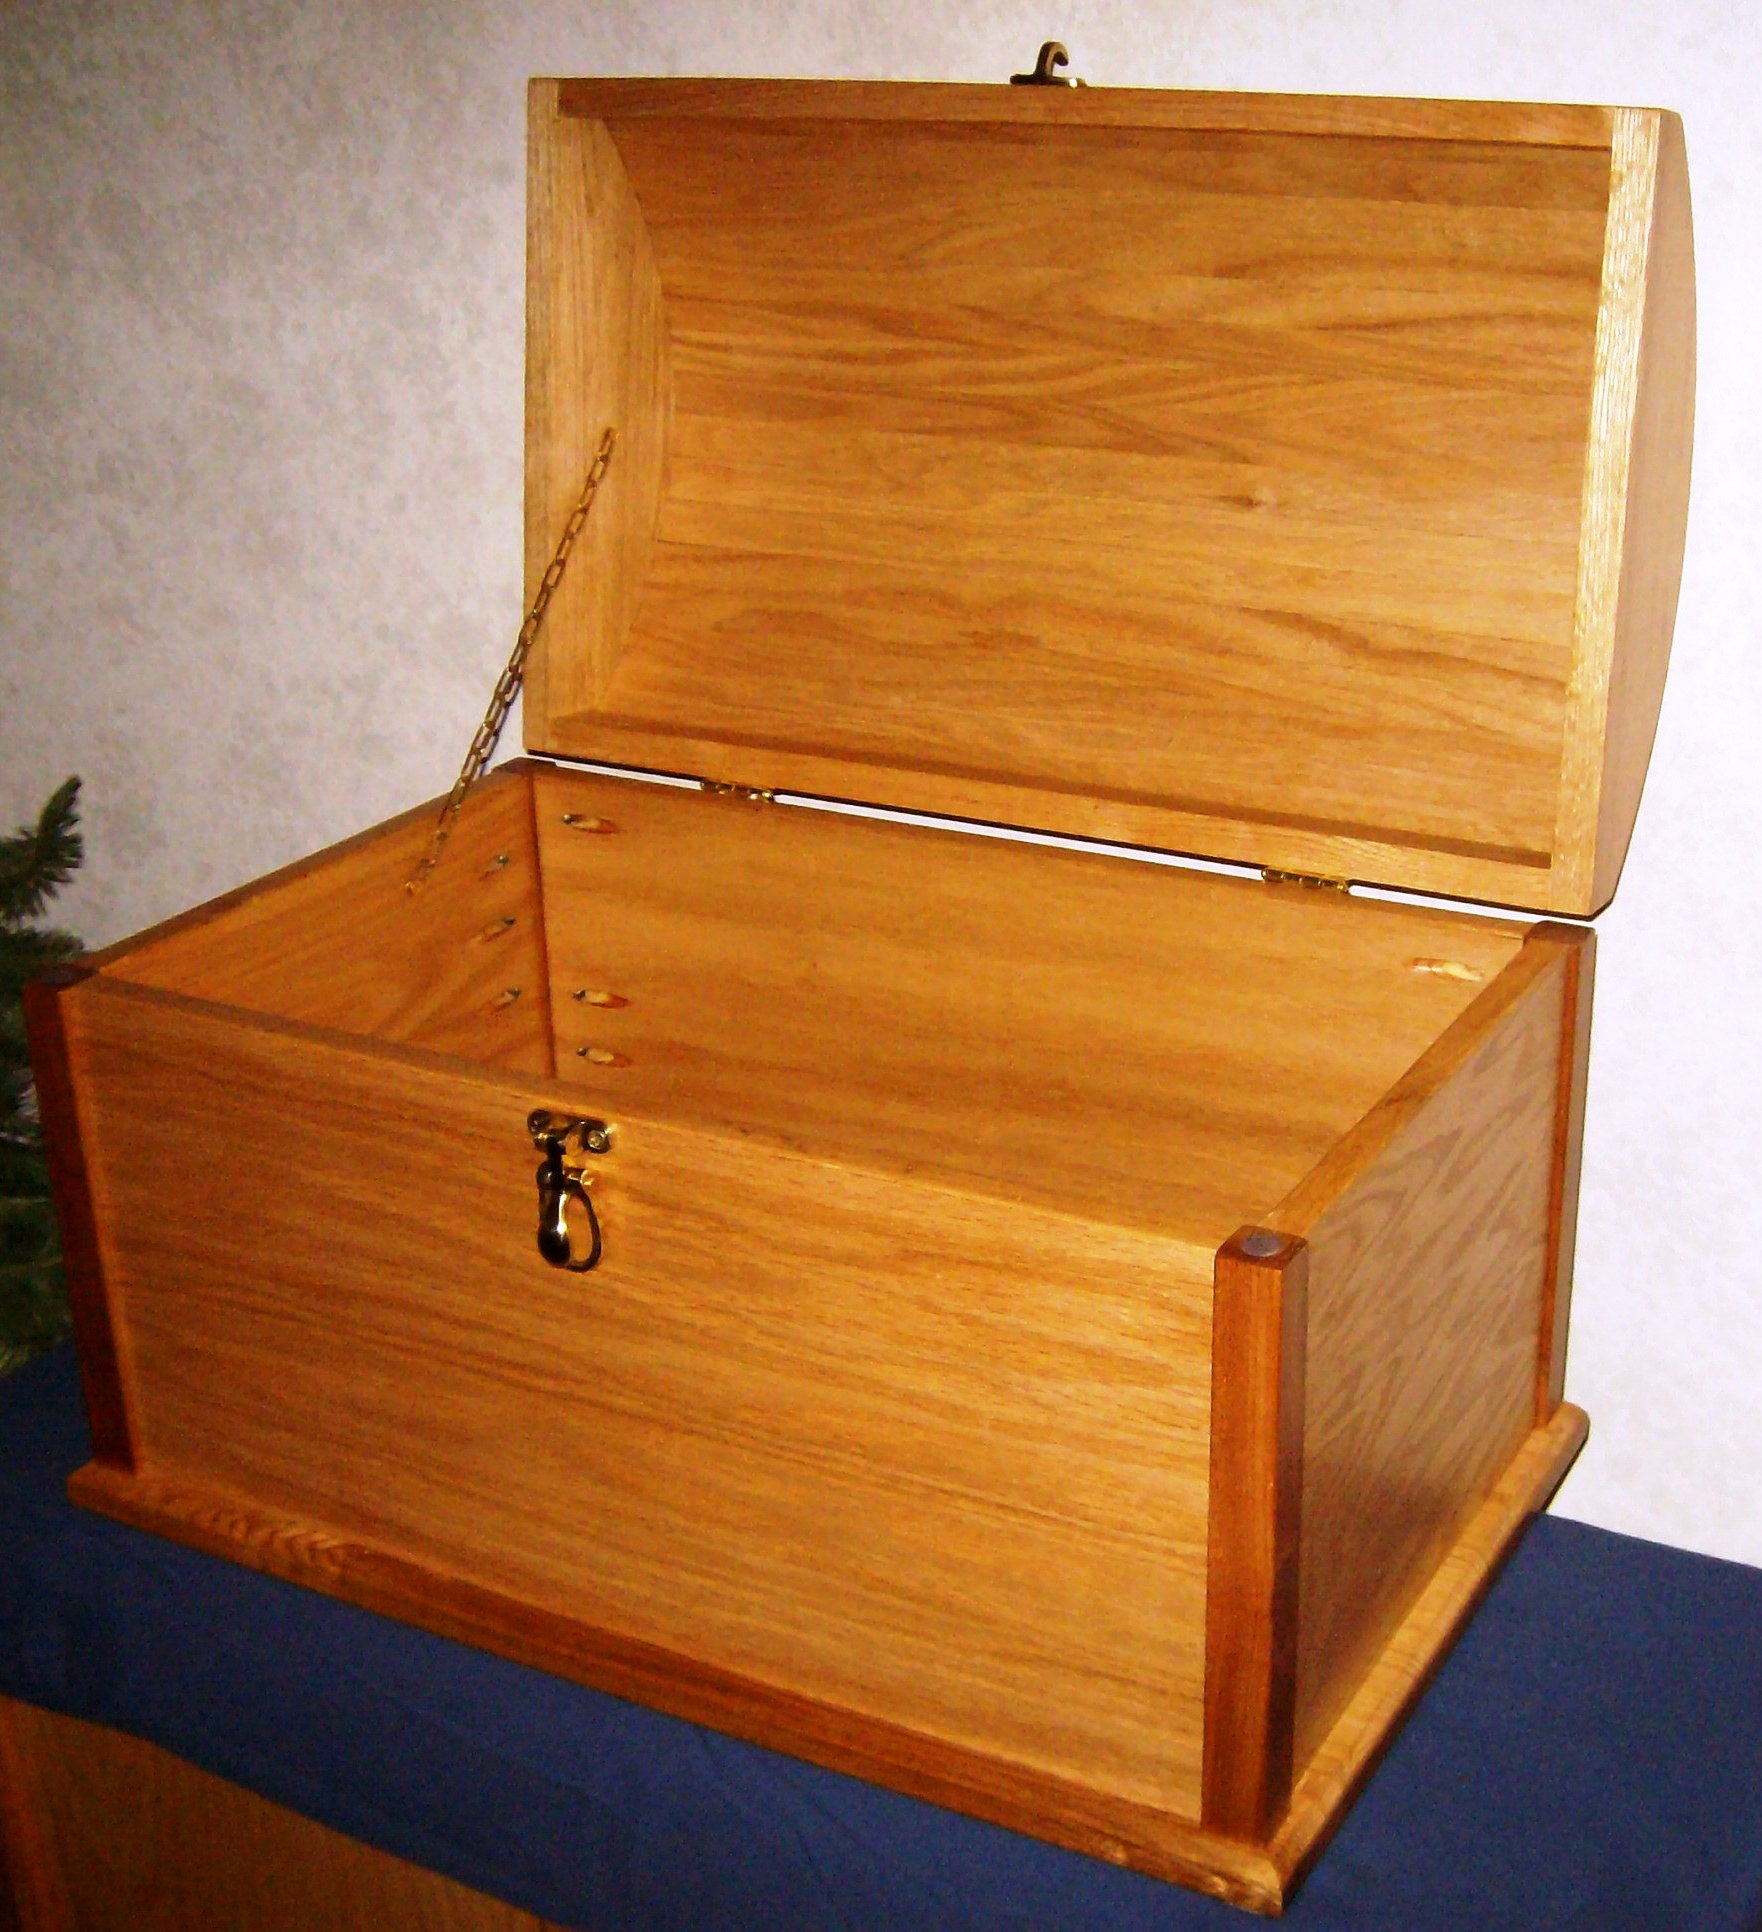 storage treasure chest toy box